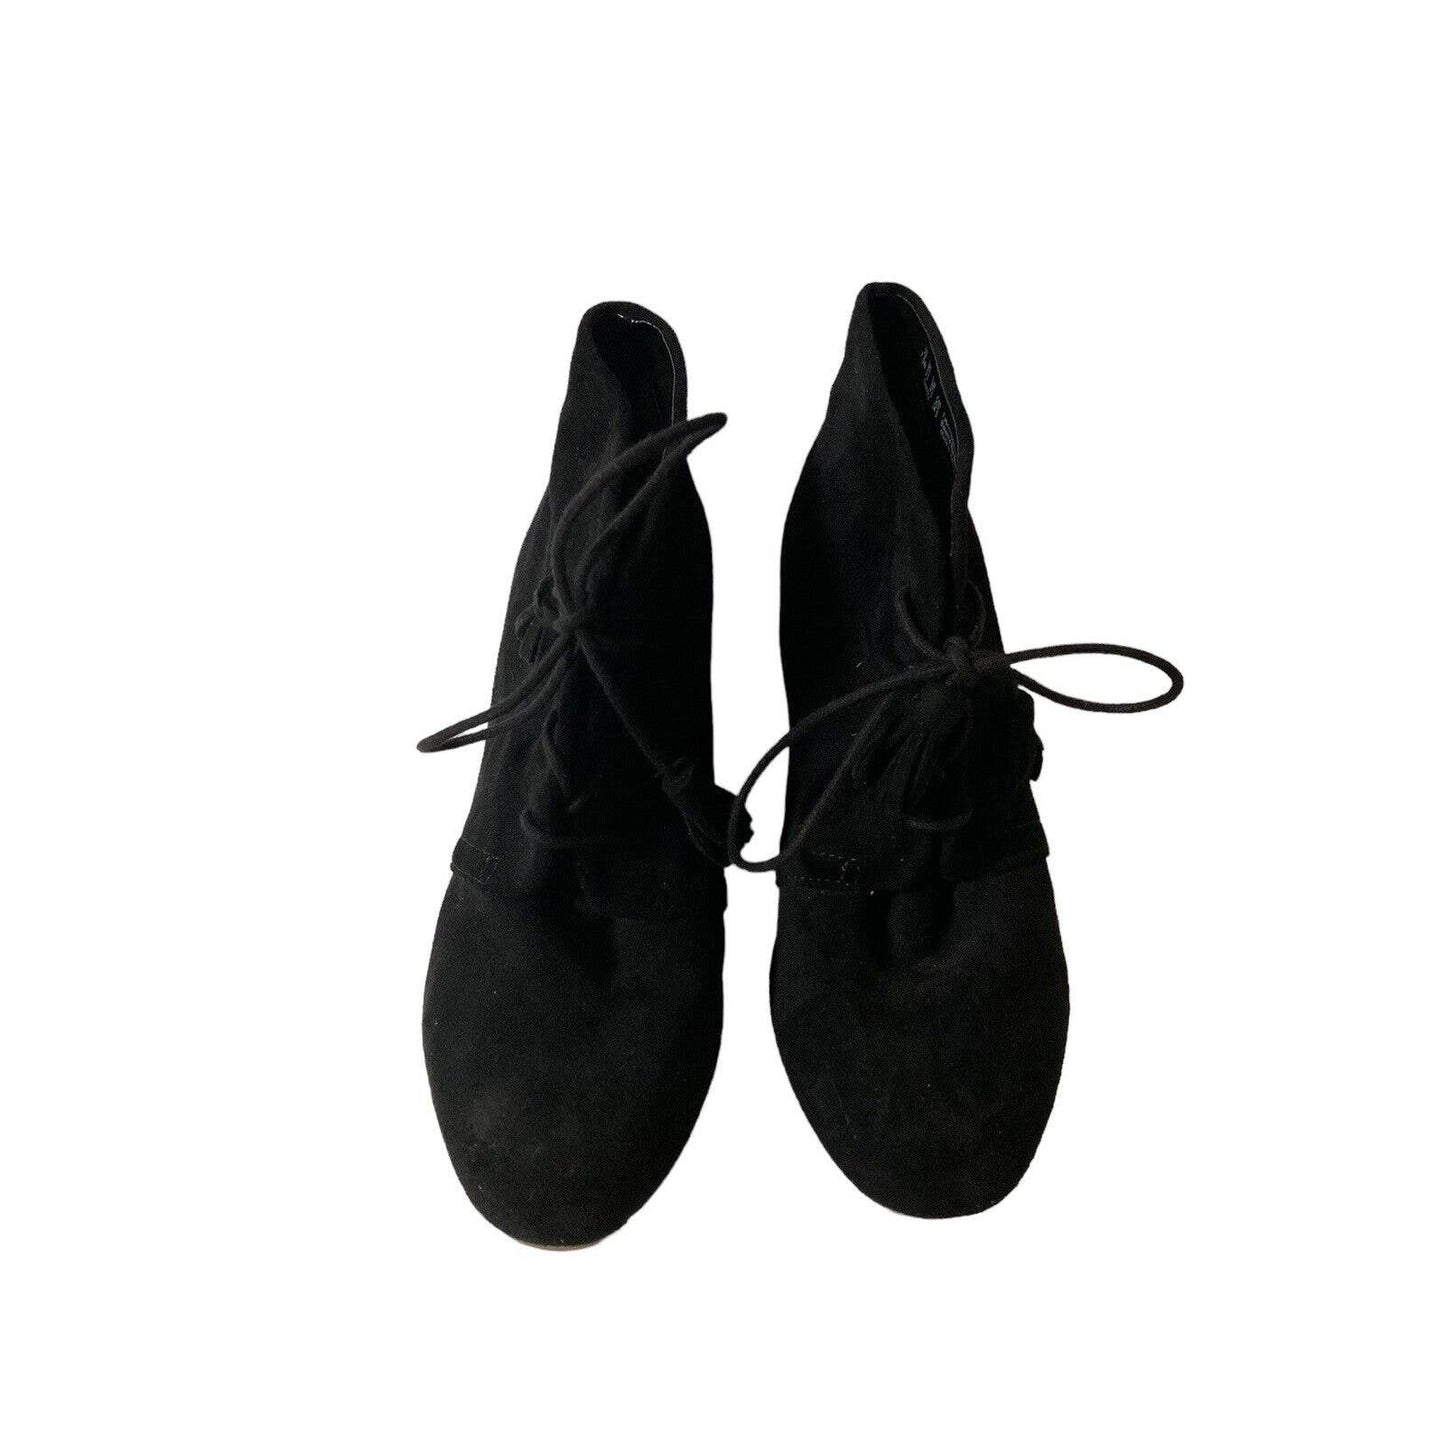 Dr Scholls Boots Dakota Desert Ankle Bootie Lace Up Wedge Black Suede 7.5 W